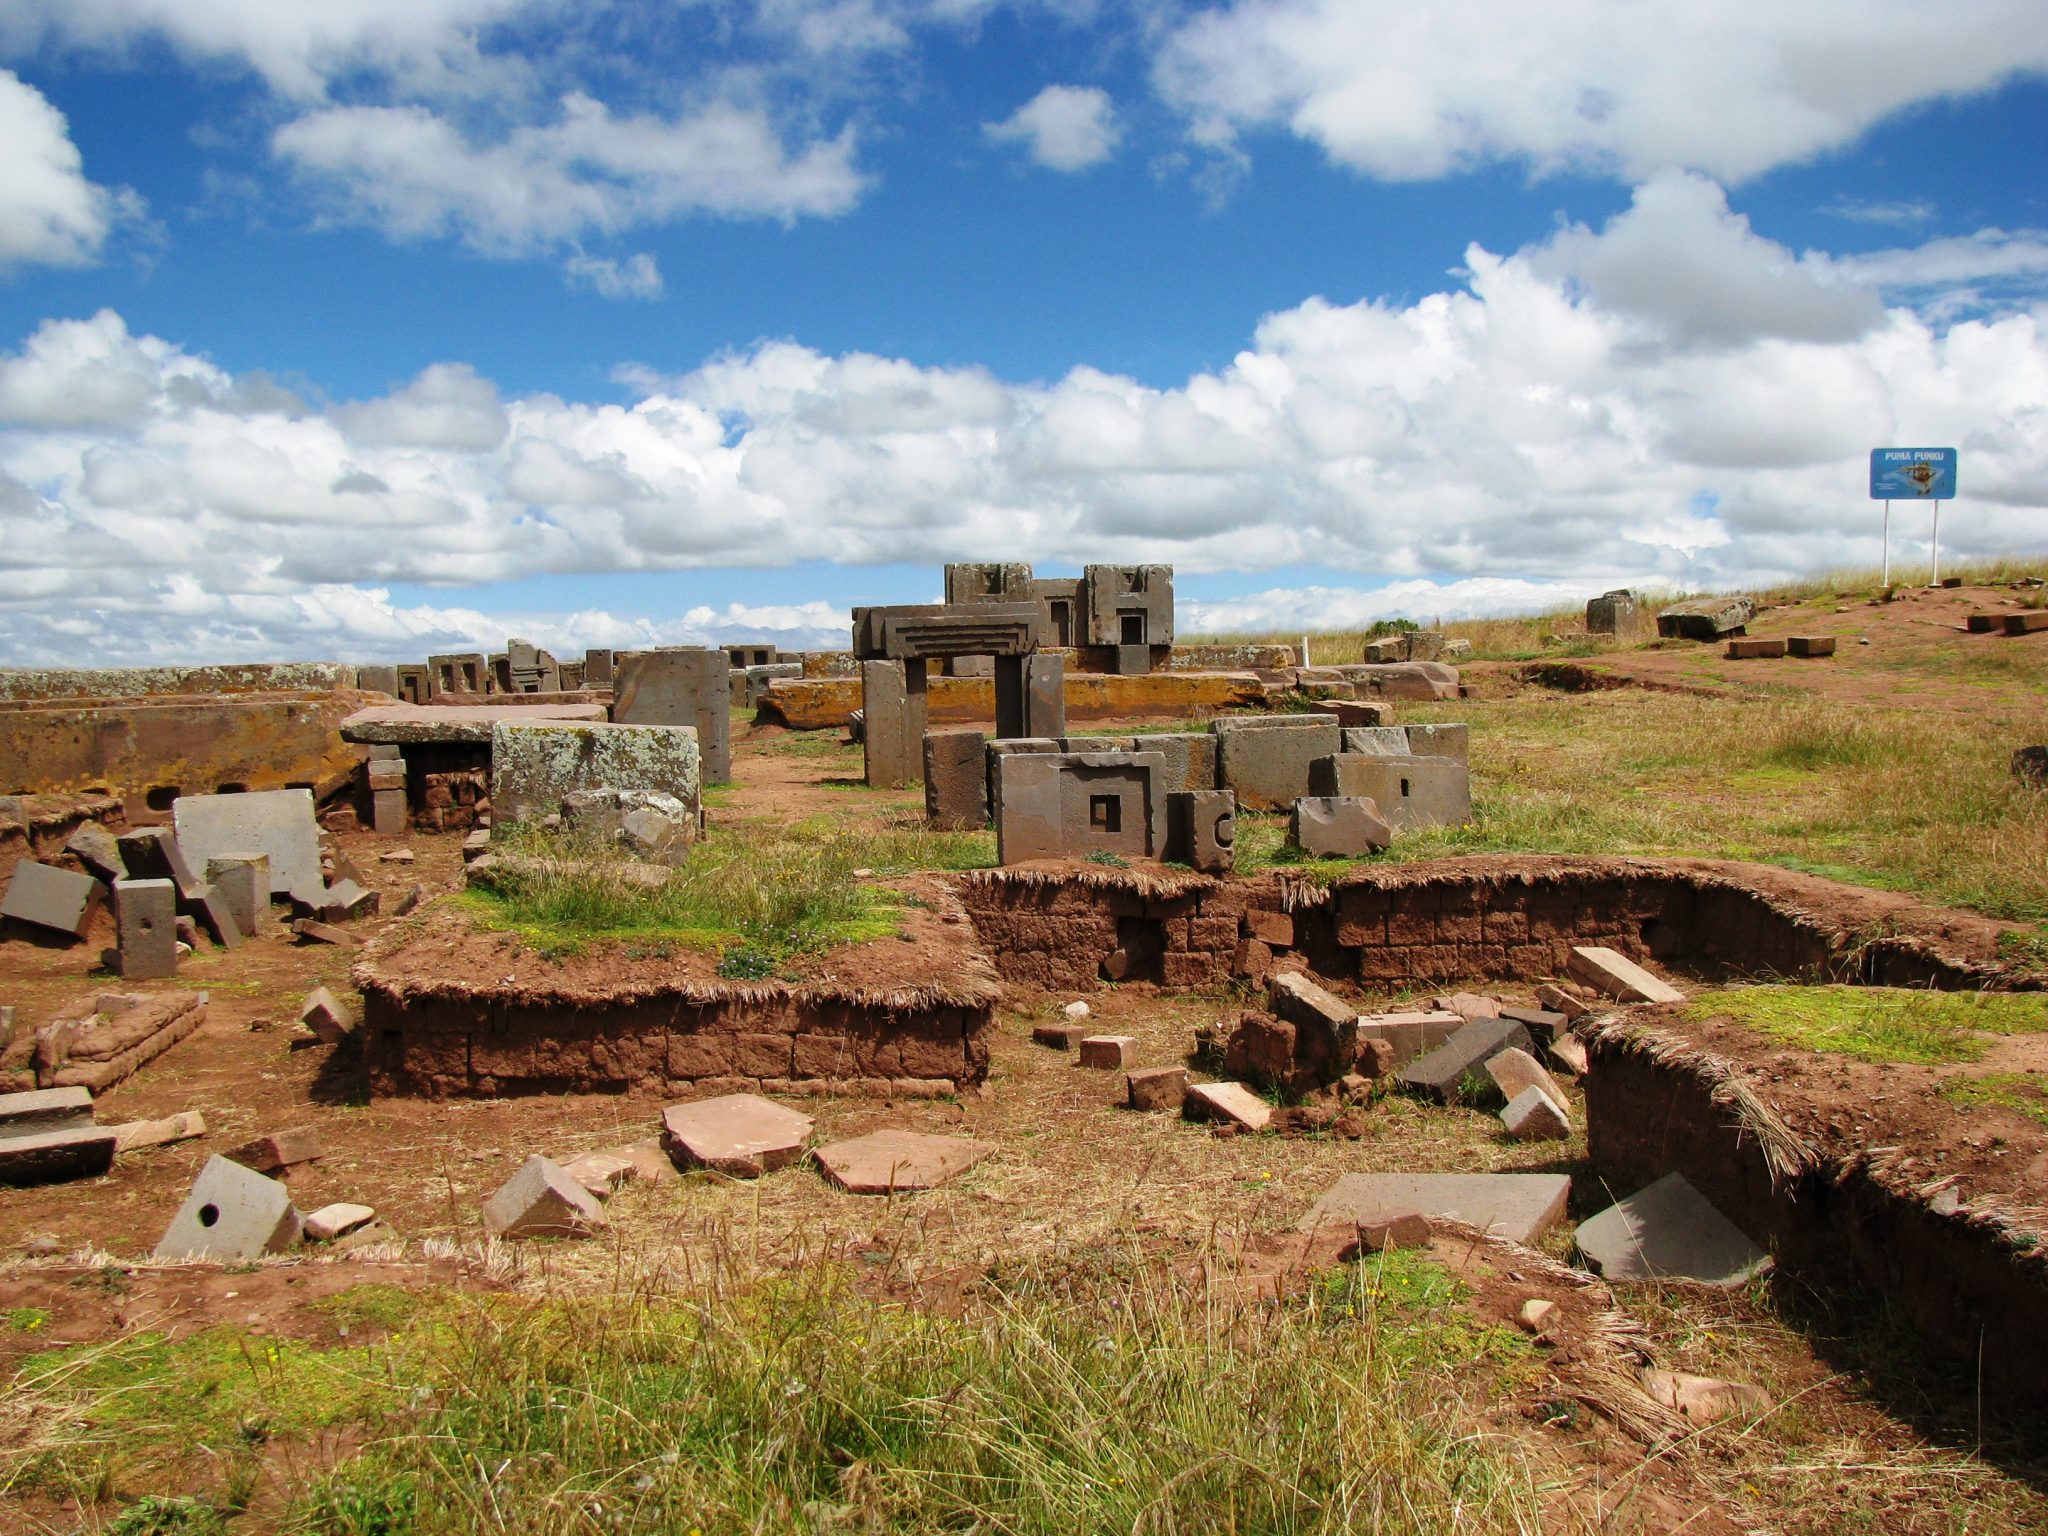 The ruins of the Pumapunku. Image via Wikipedia